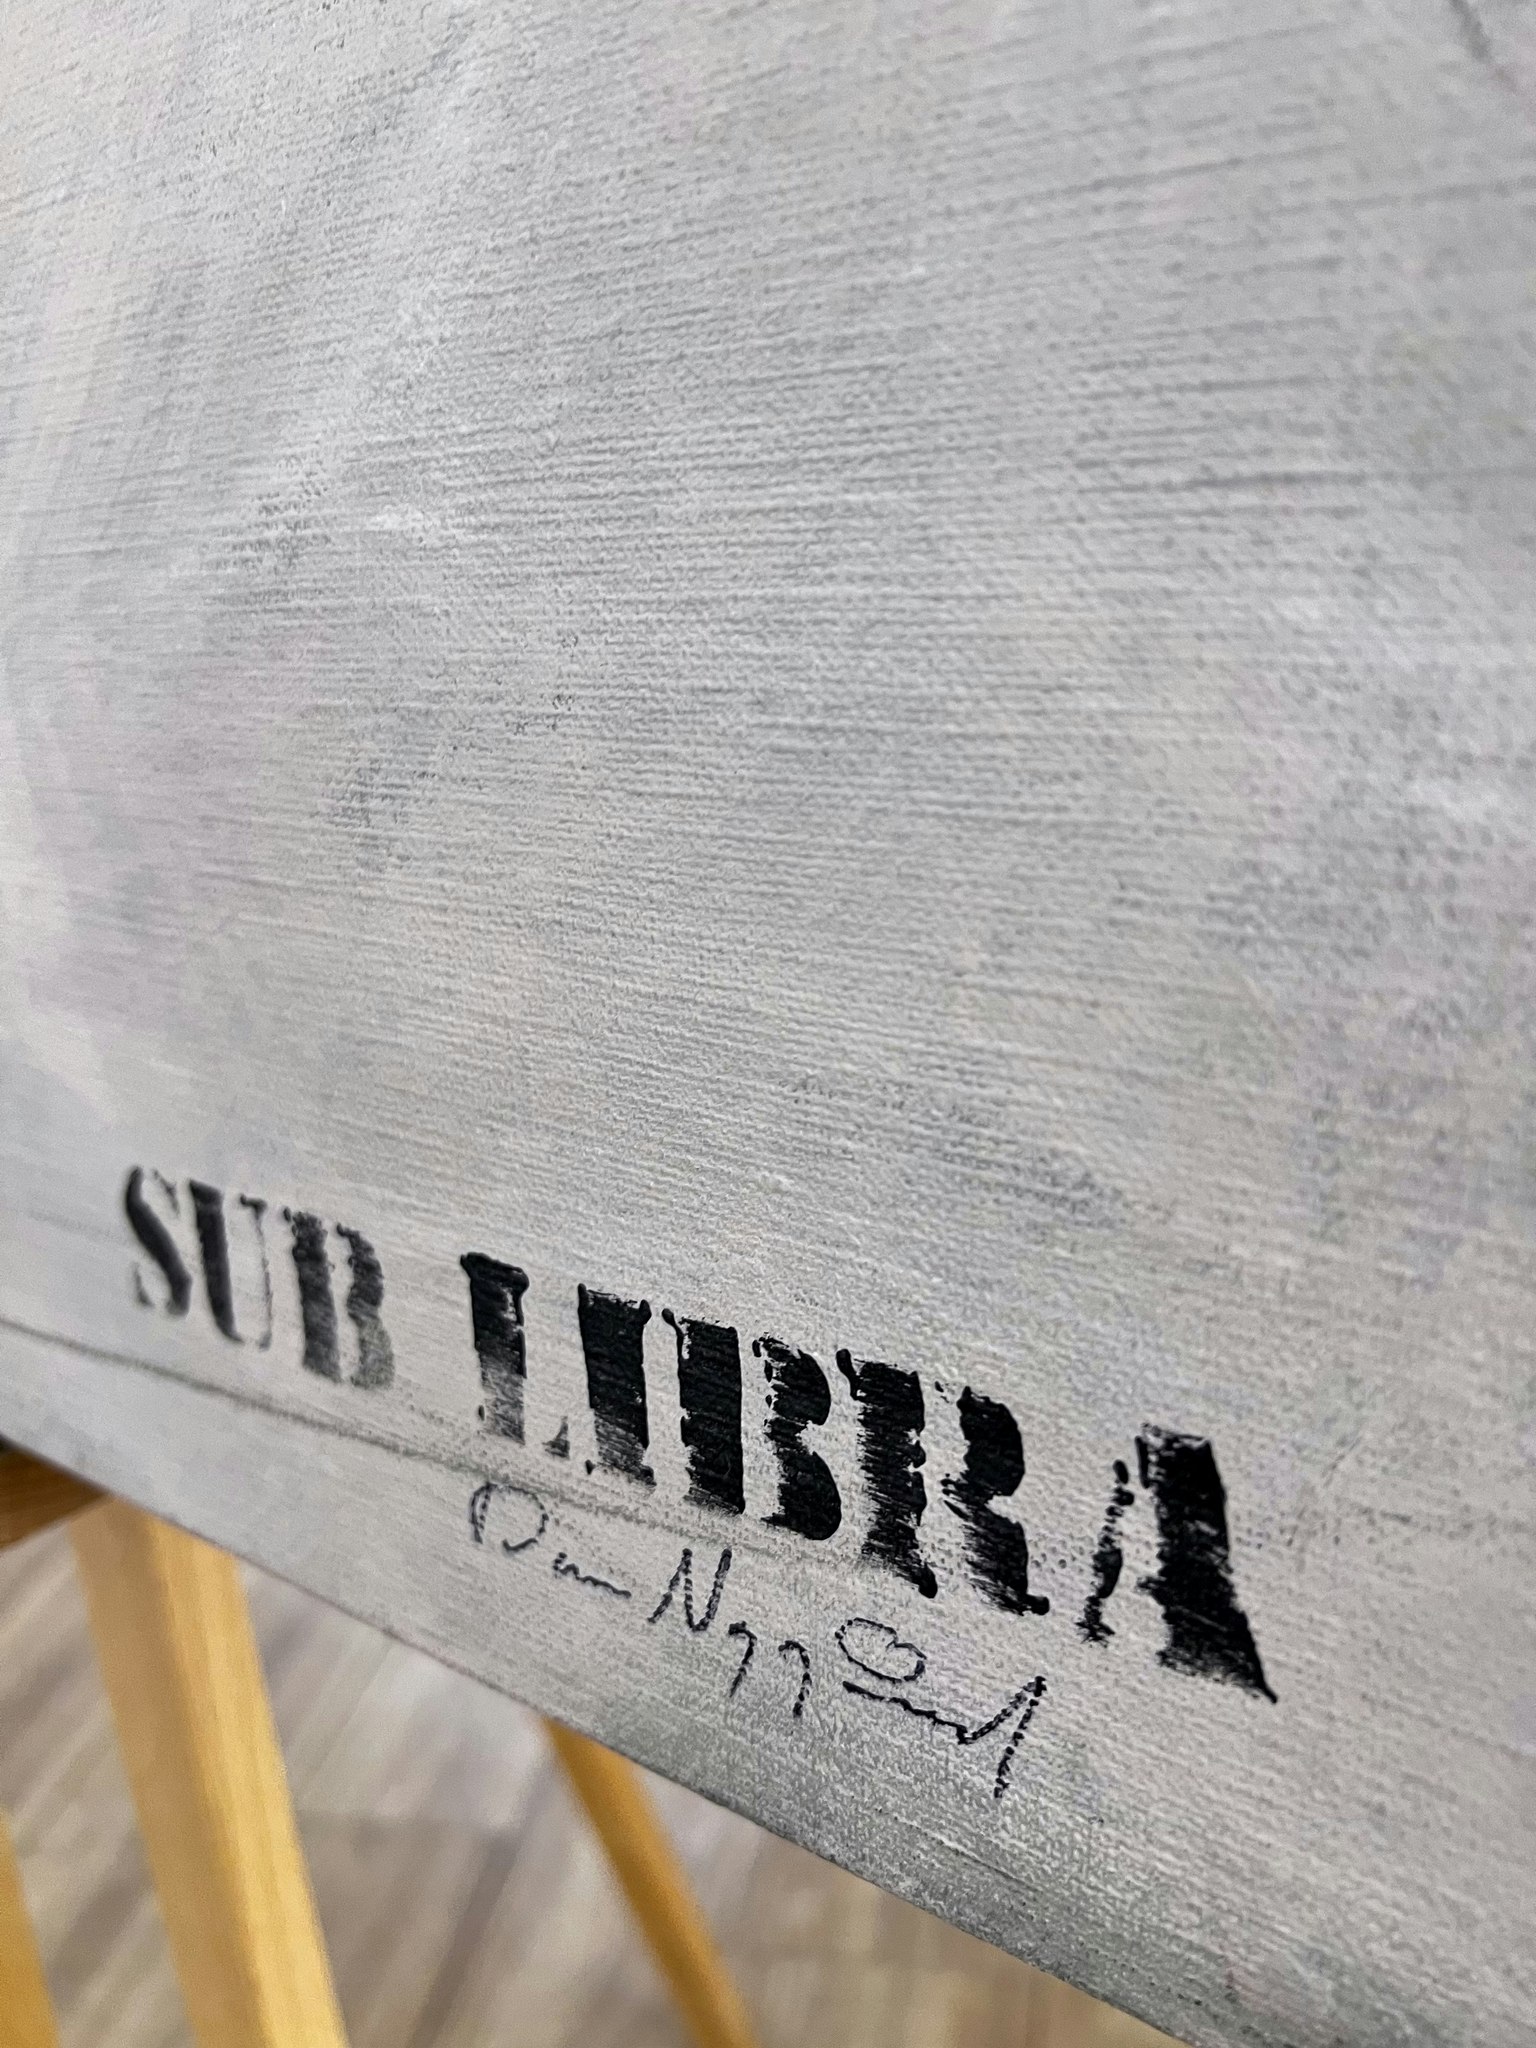 "Sub Libra" Original av Dan Nygård. 102x83 cm